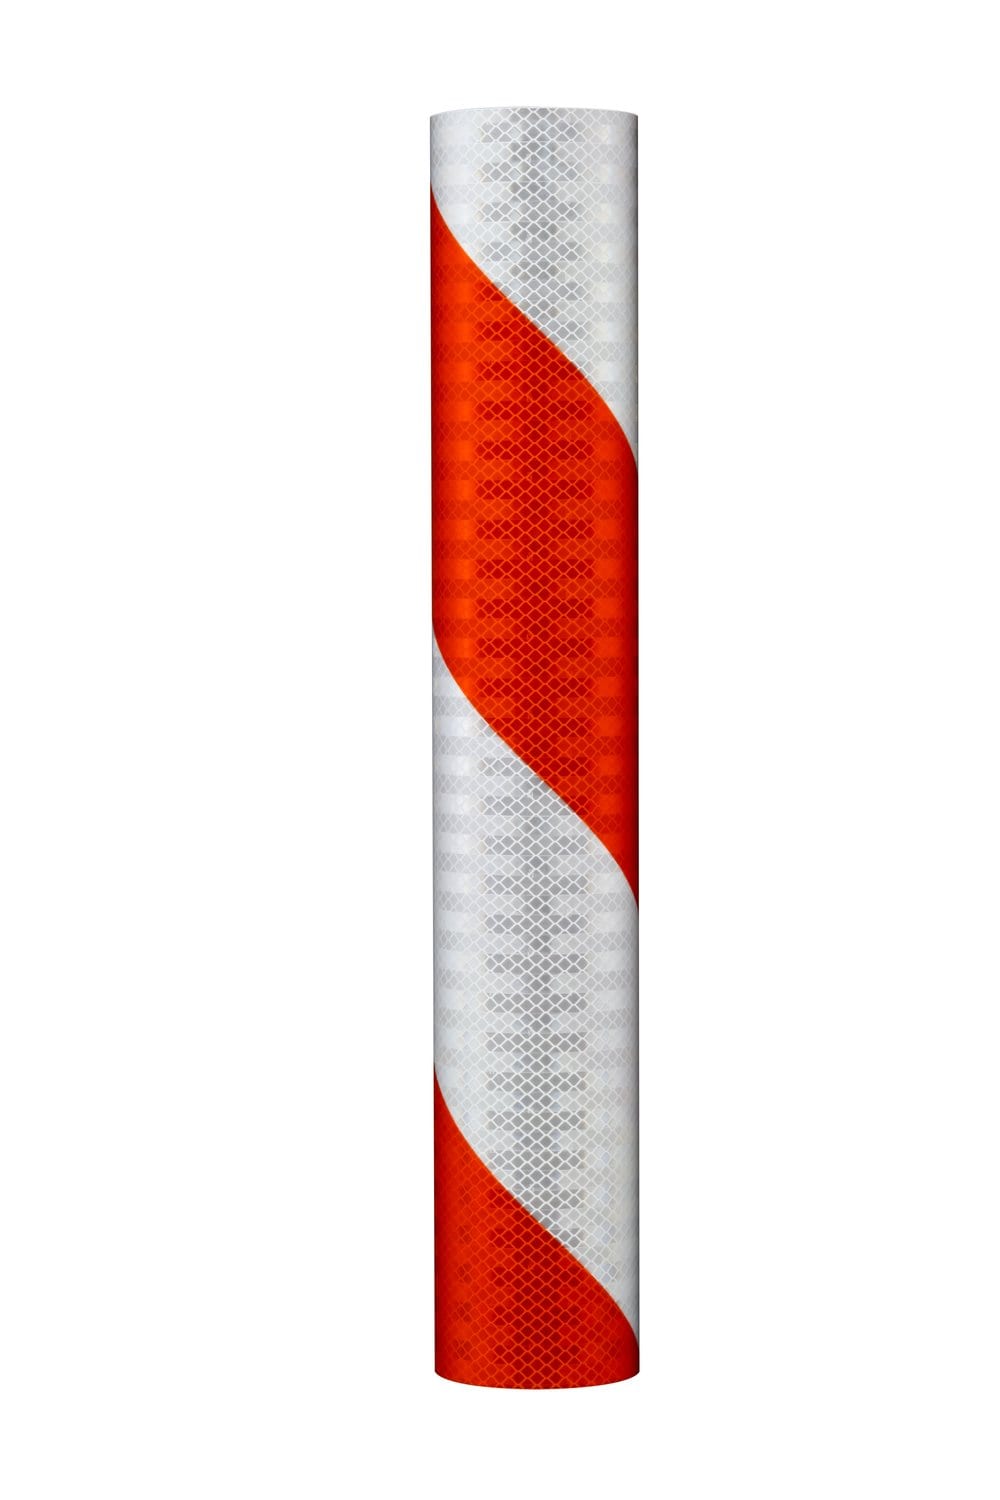 7010389481 - 3M Flexible Prismatic Reflective Barricade Sheeting 3334L Orange/White,
4 in stripe/left, 11.75 in x 100 yd